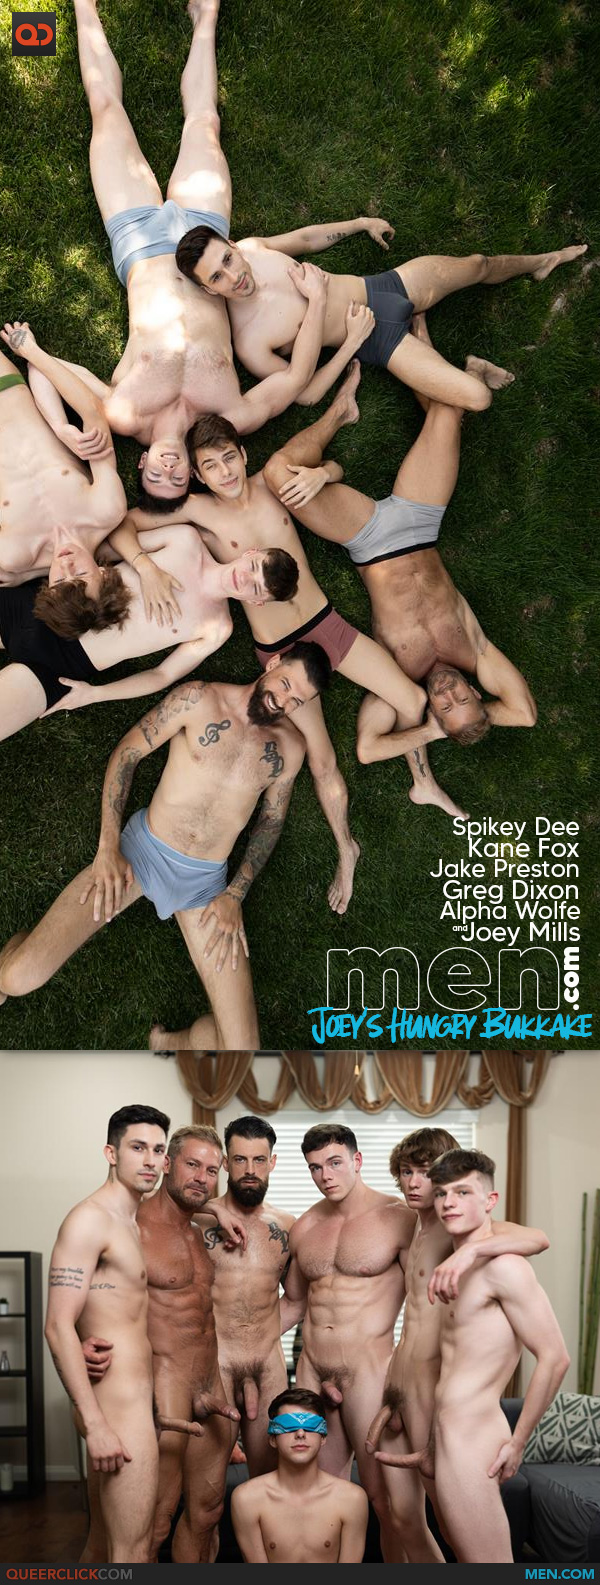 Men.com: Joey Mill's Hungry Bukkake